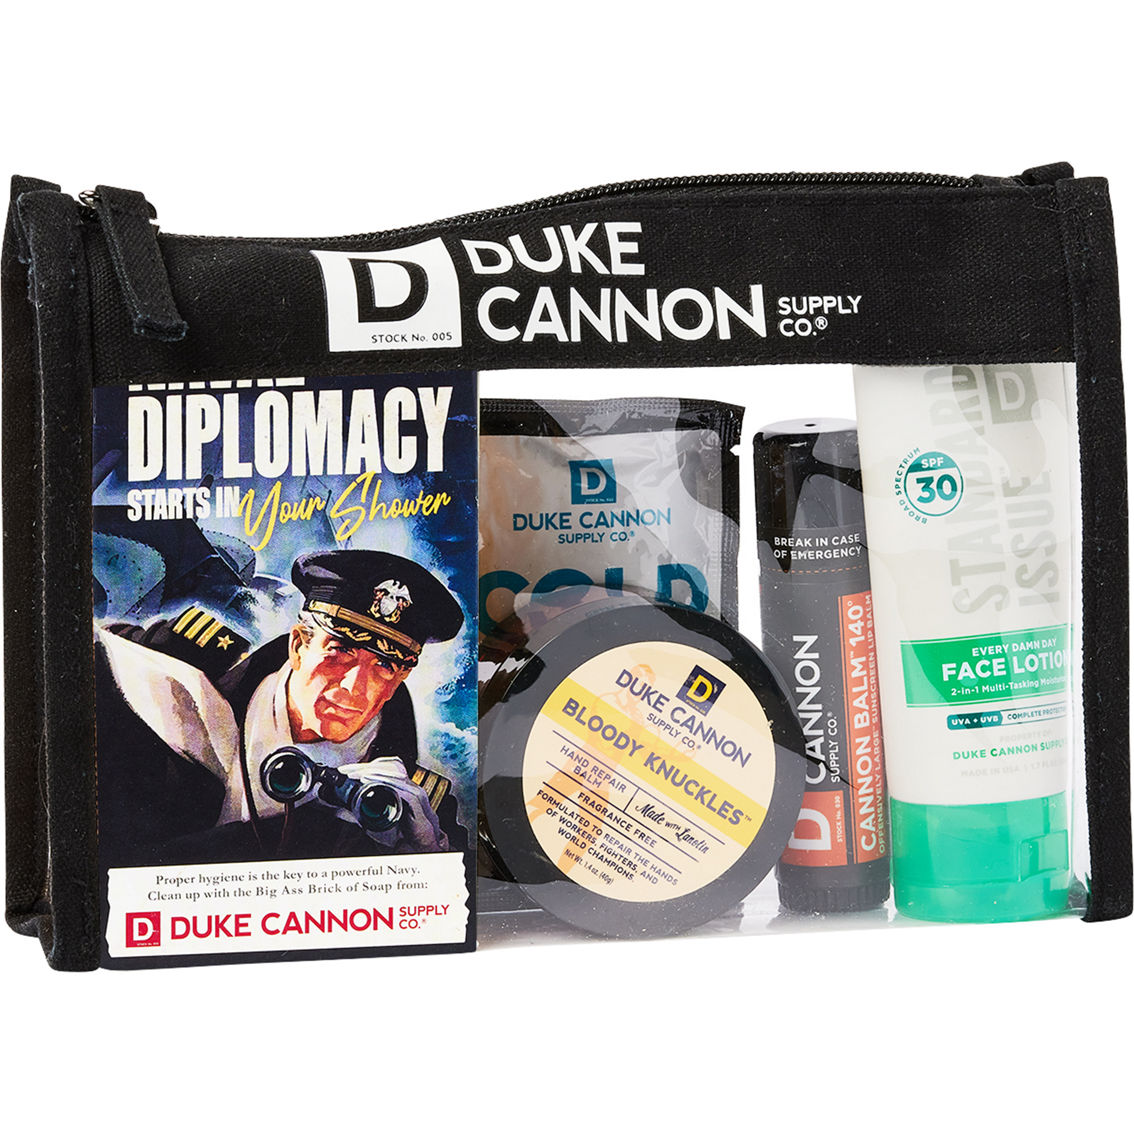 Duke Cannon Captain's Quarters Gift Set - Image 2 of 2